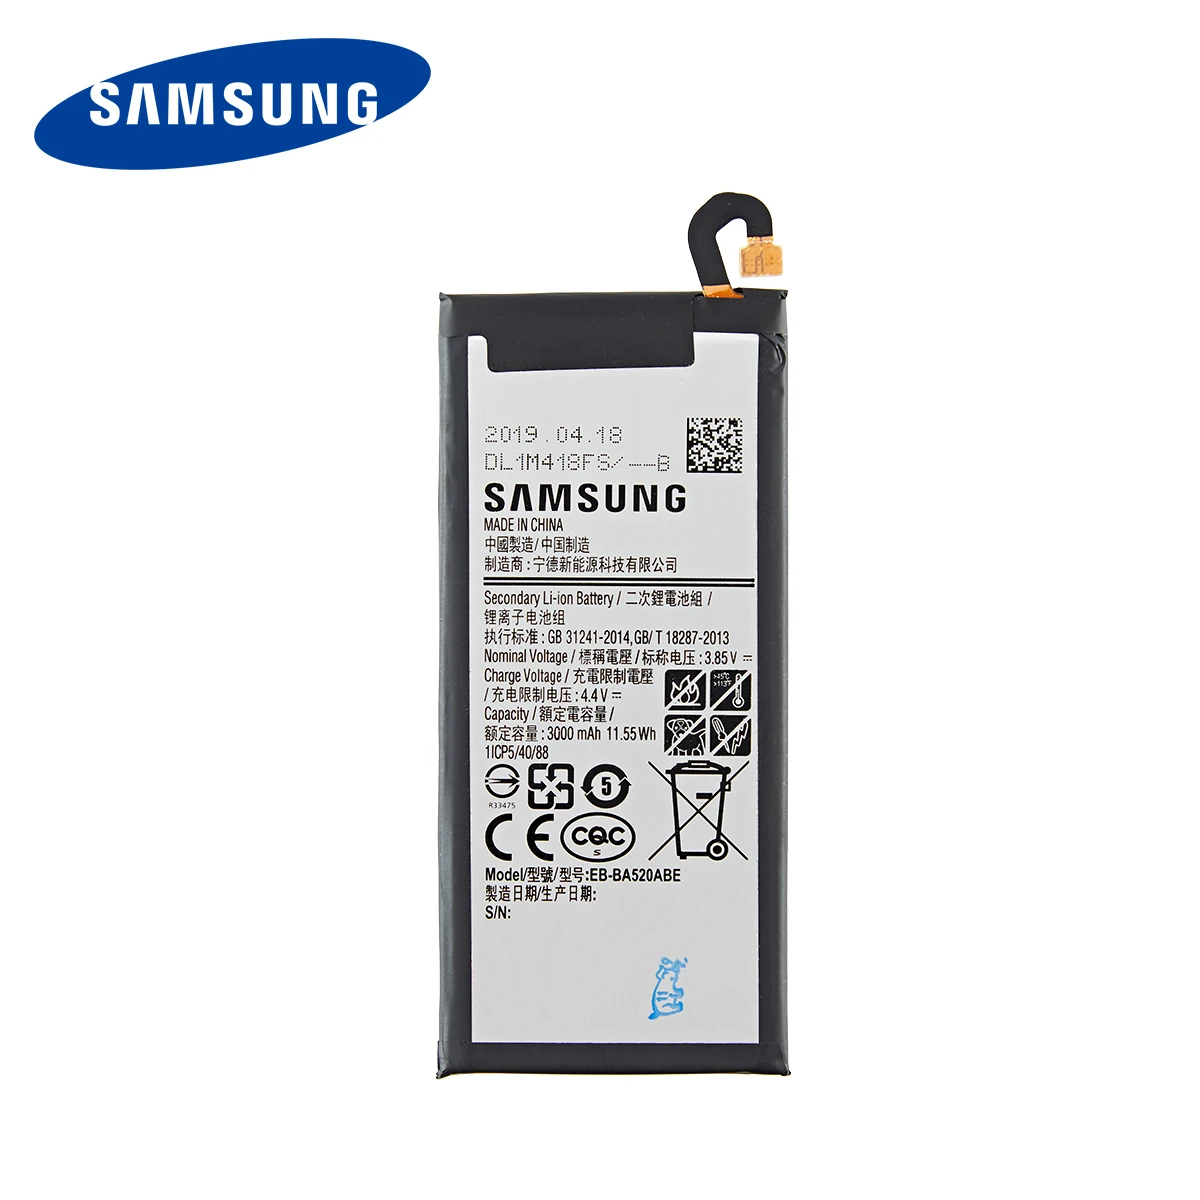 SAMSUNG Originalus EB-BA520ABE 3000mAh Baterija Samsung Galaxy A5 2017 Edition A520 SM-A520F A520K A520L A520S A520W A520F/DS 2